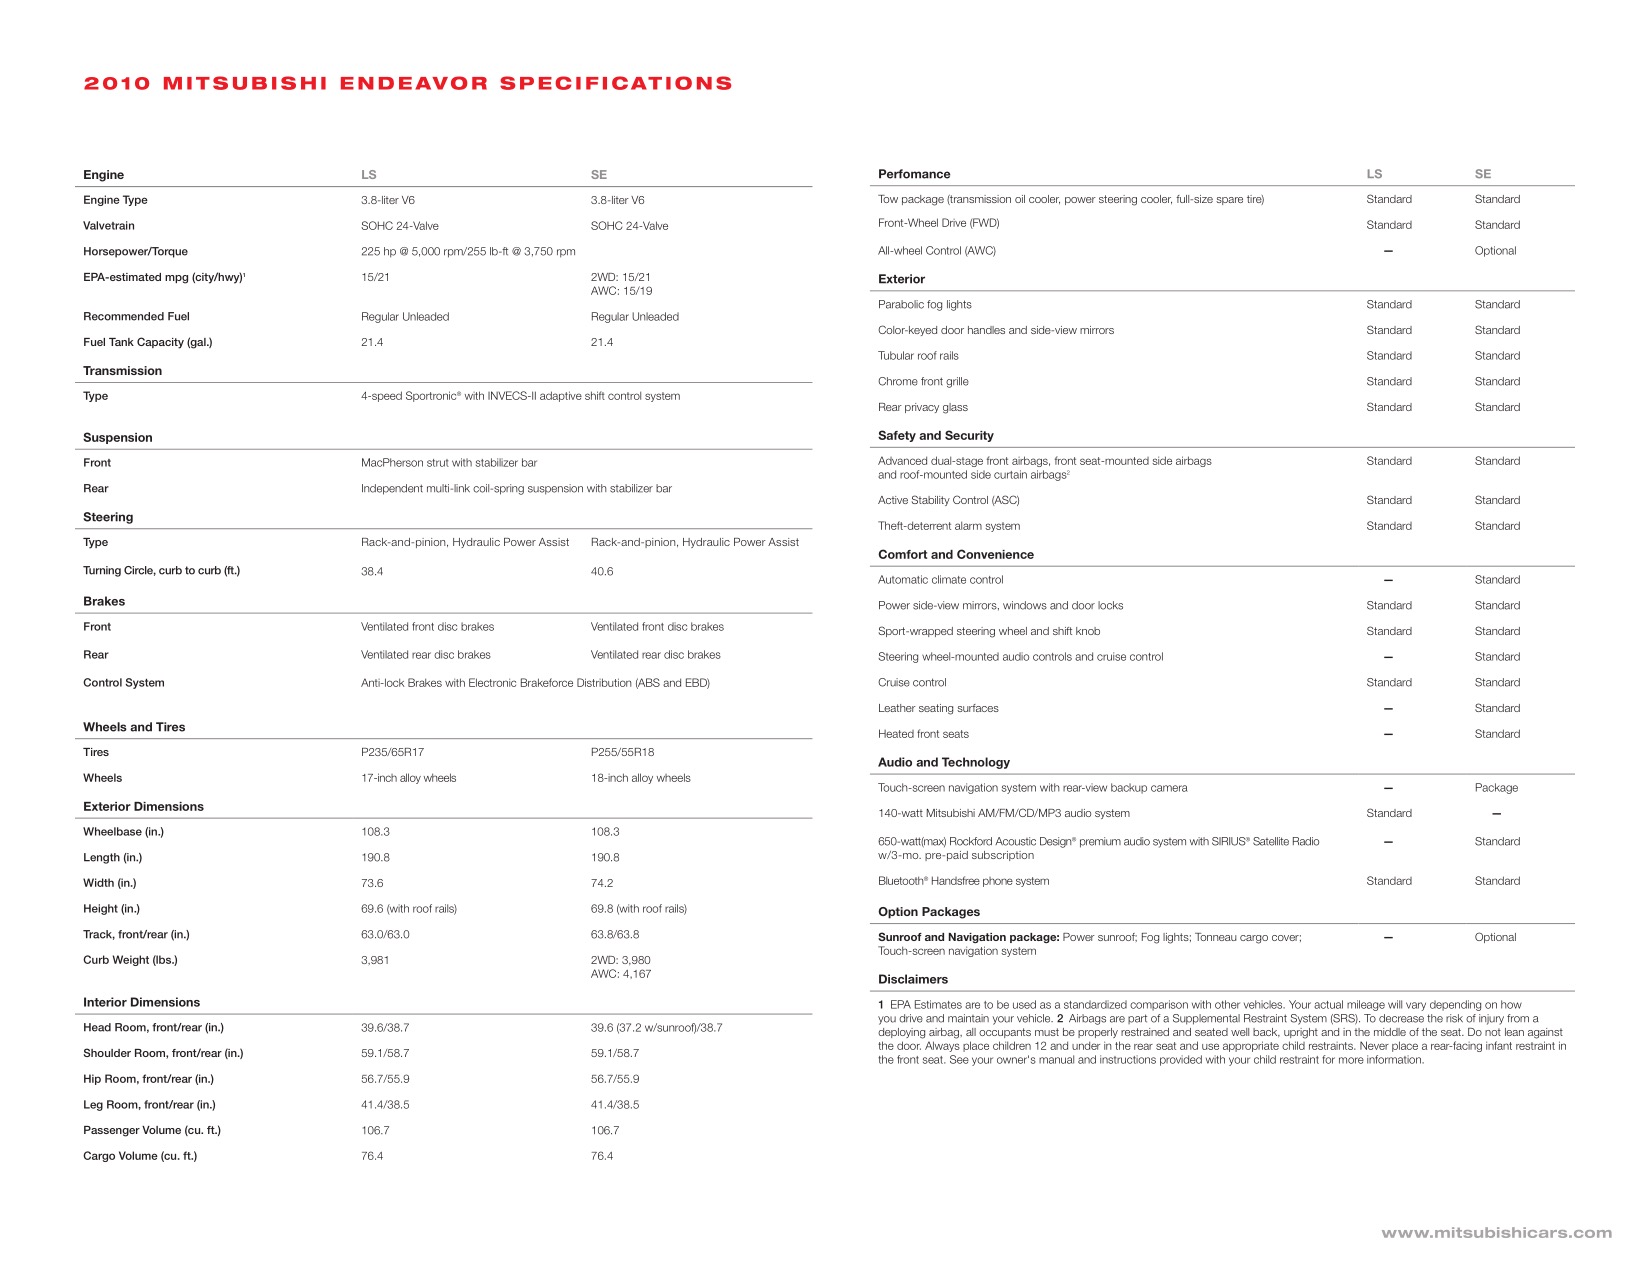 2010 Mitsubishi Endeavour Brochure Page 1